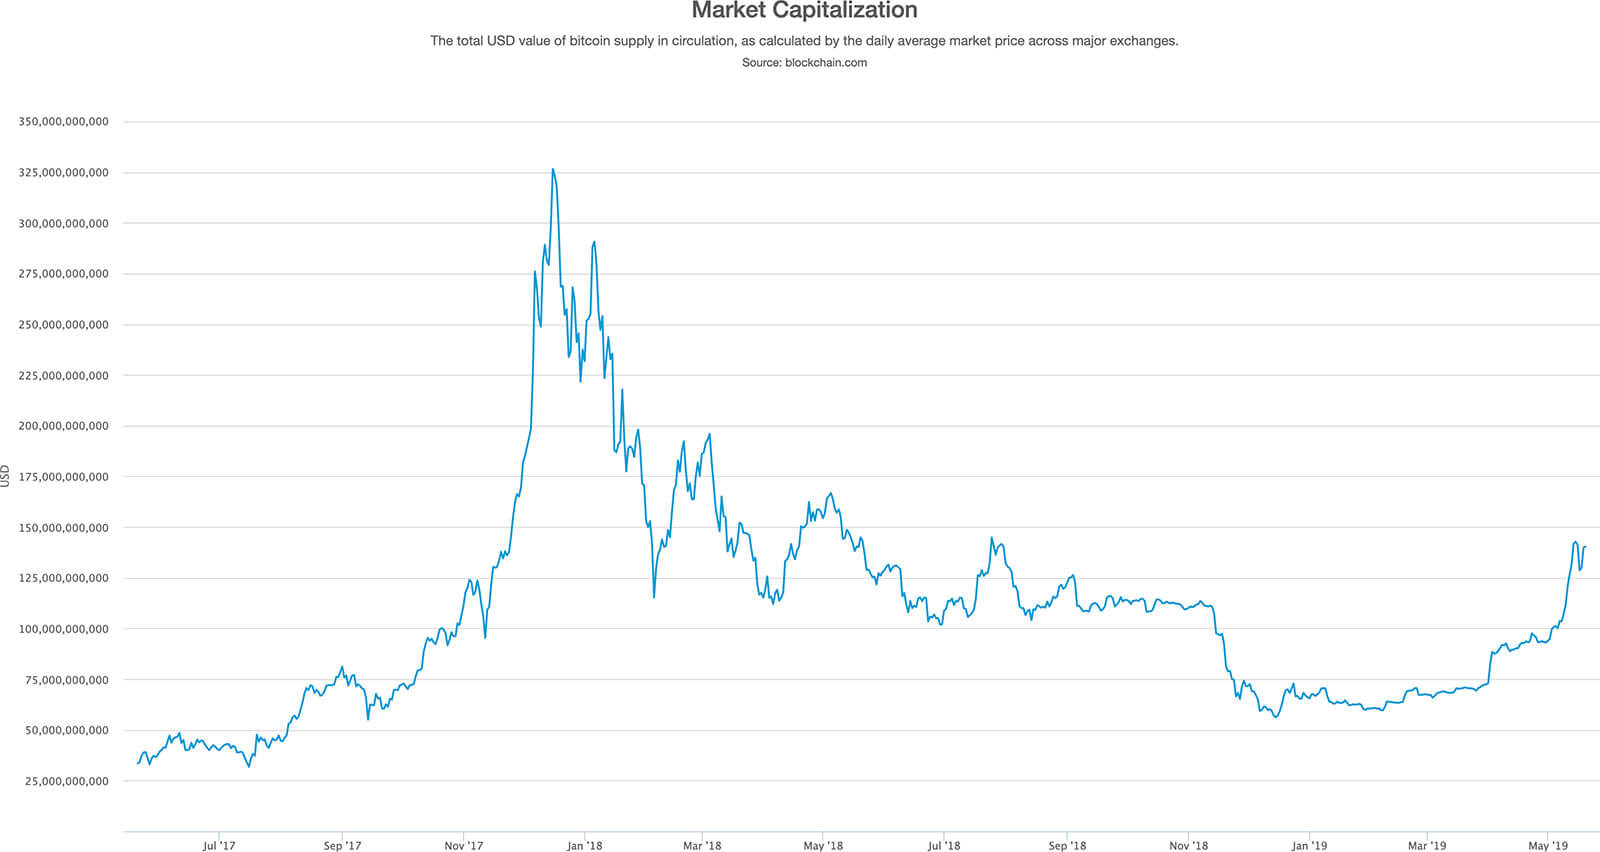 Bitcoin market cap